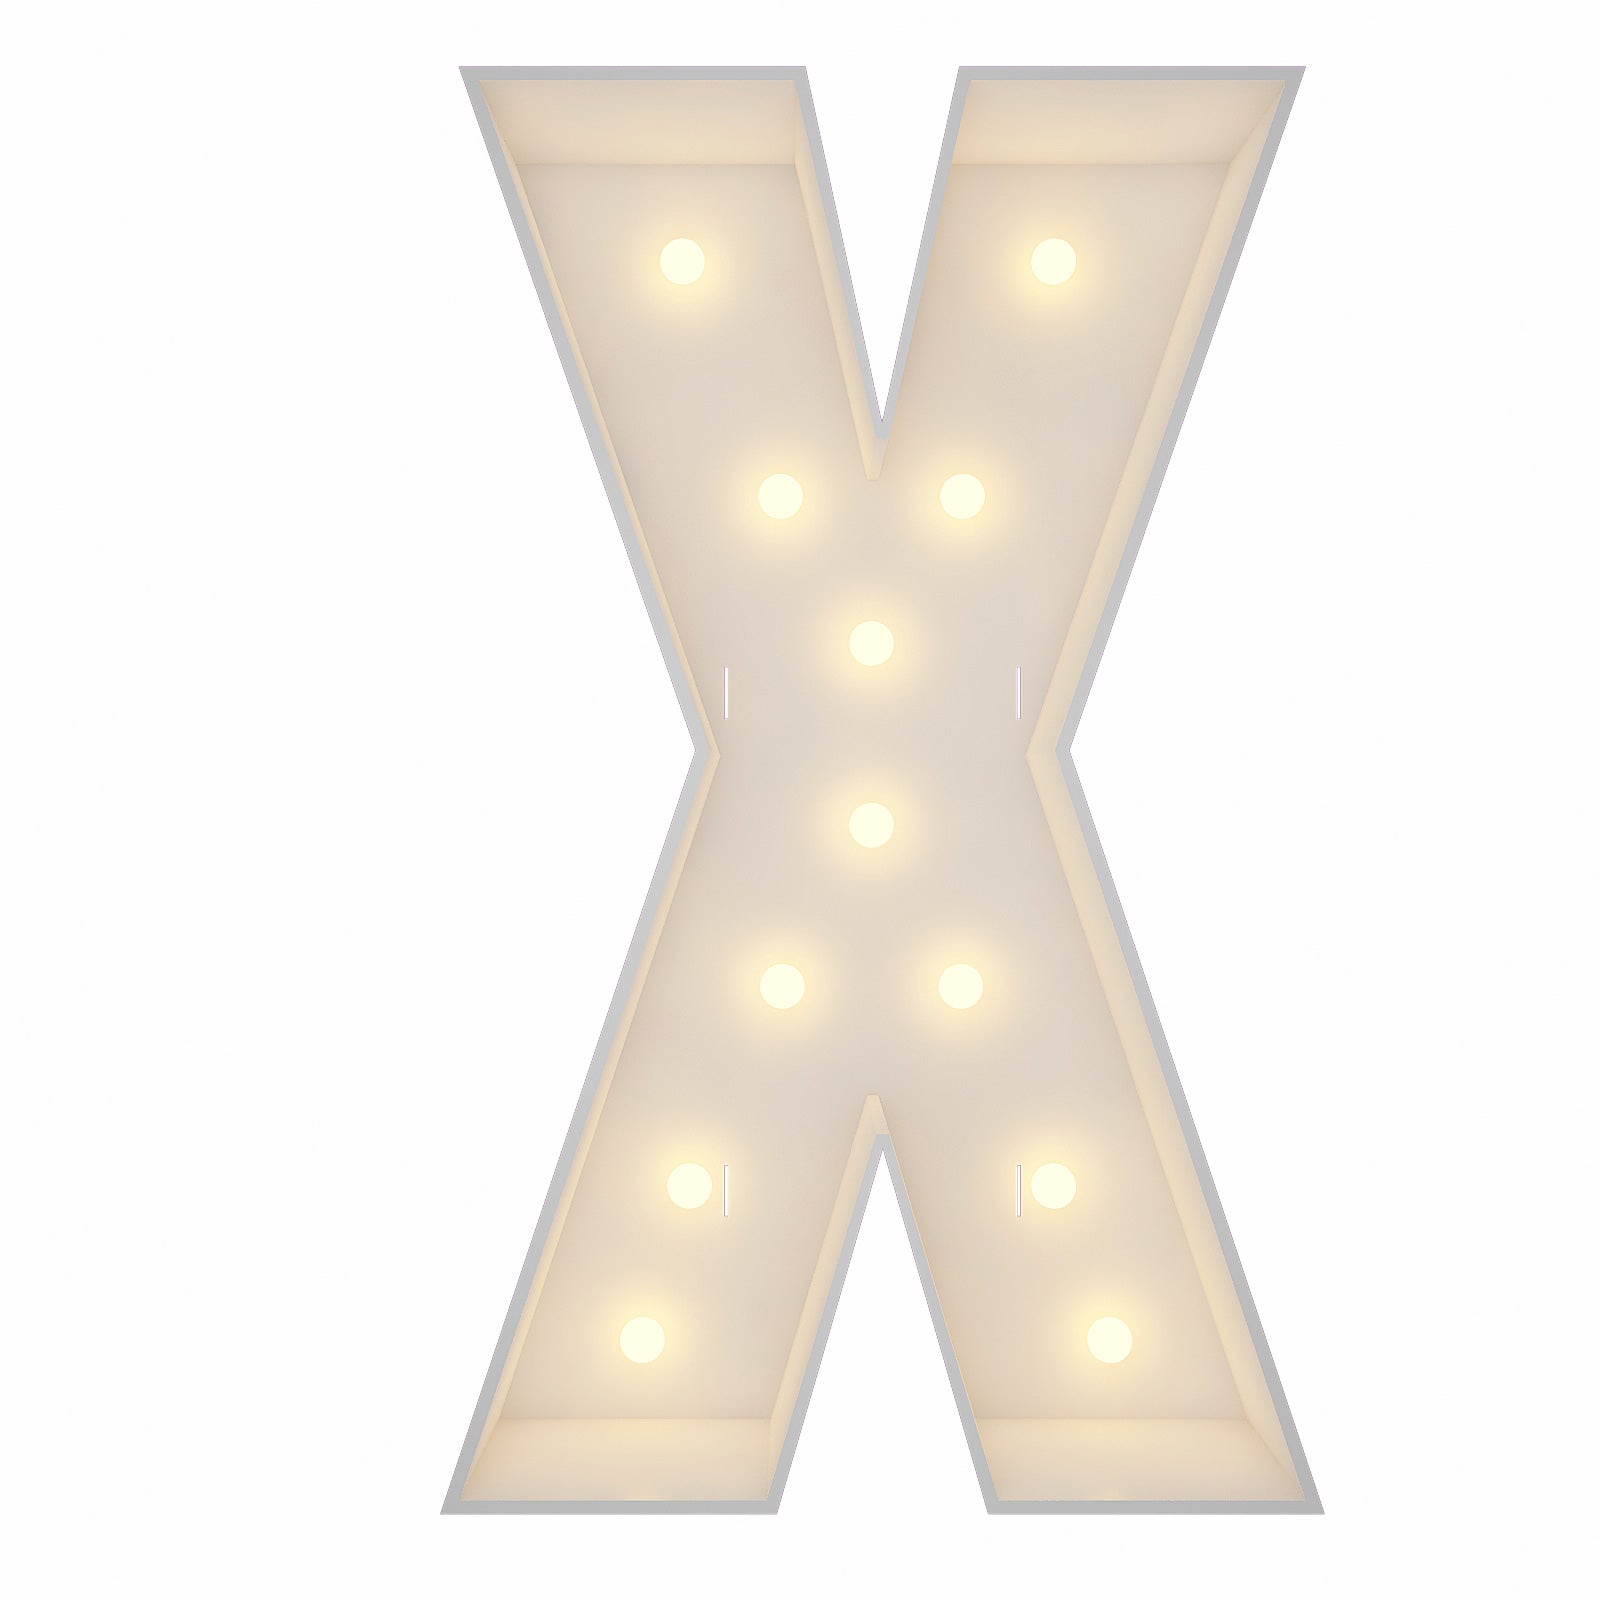 Light Up Letter Board - ApolloBox